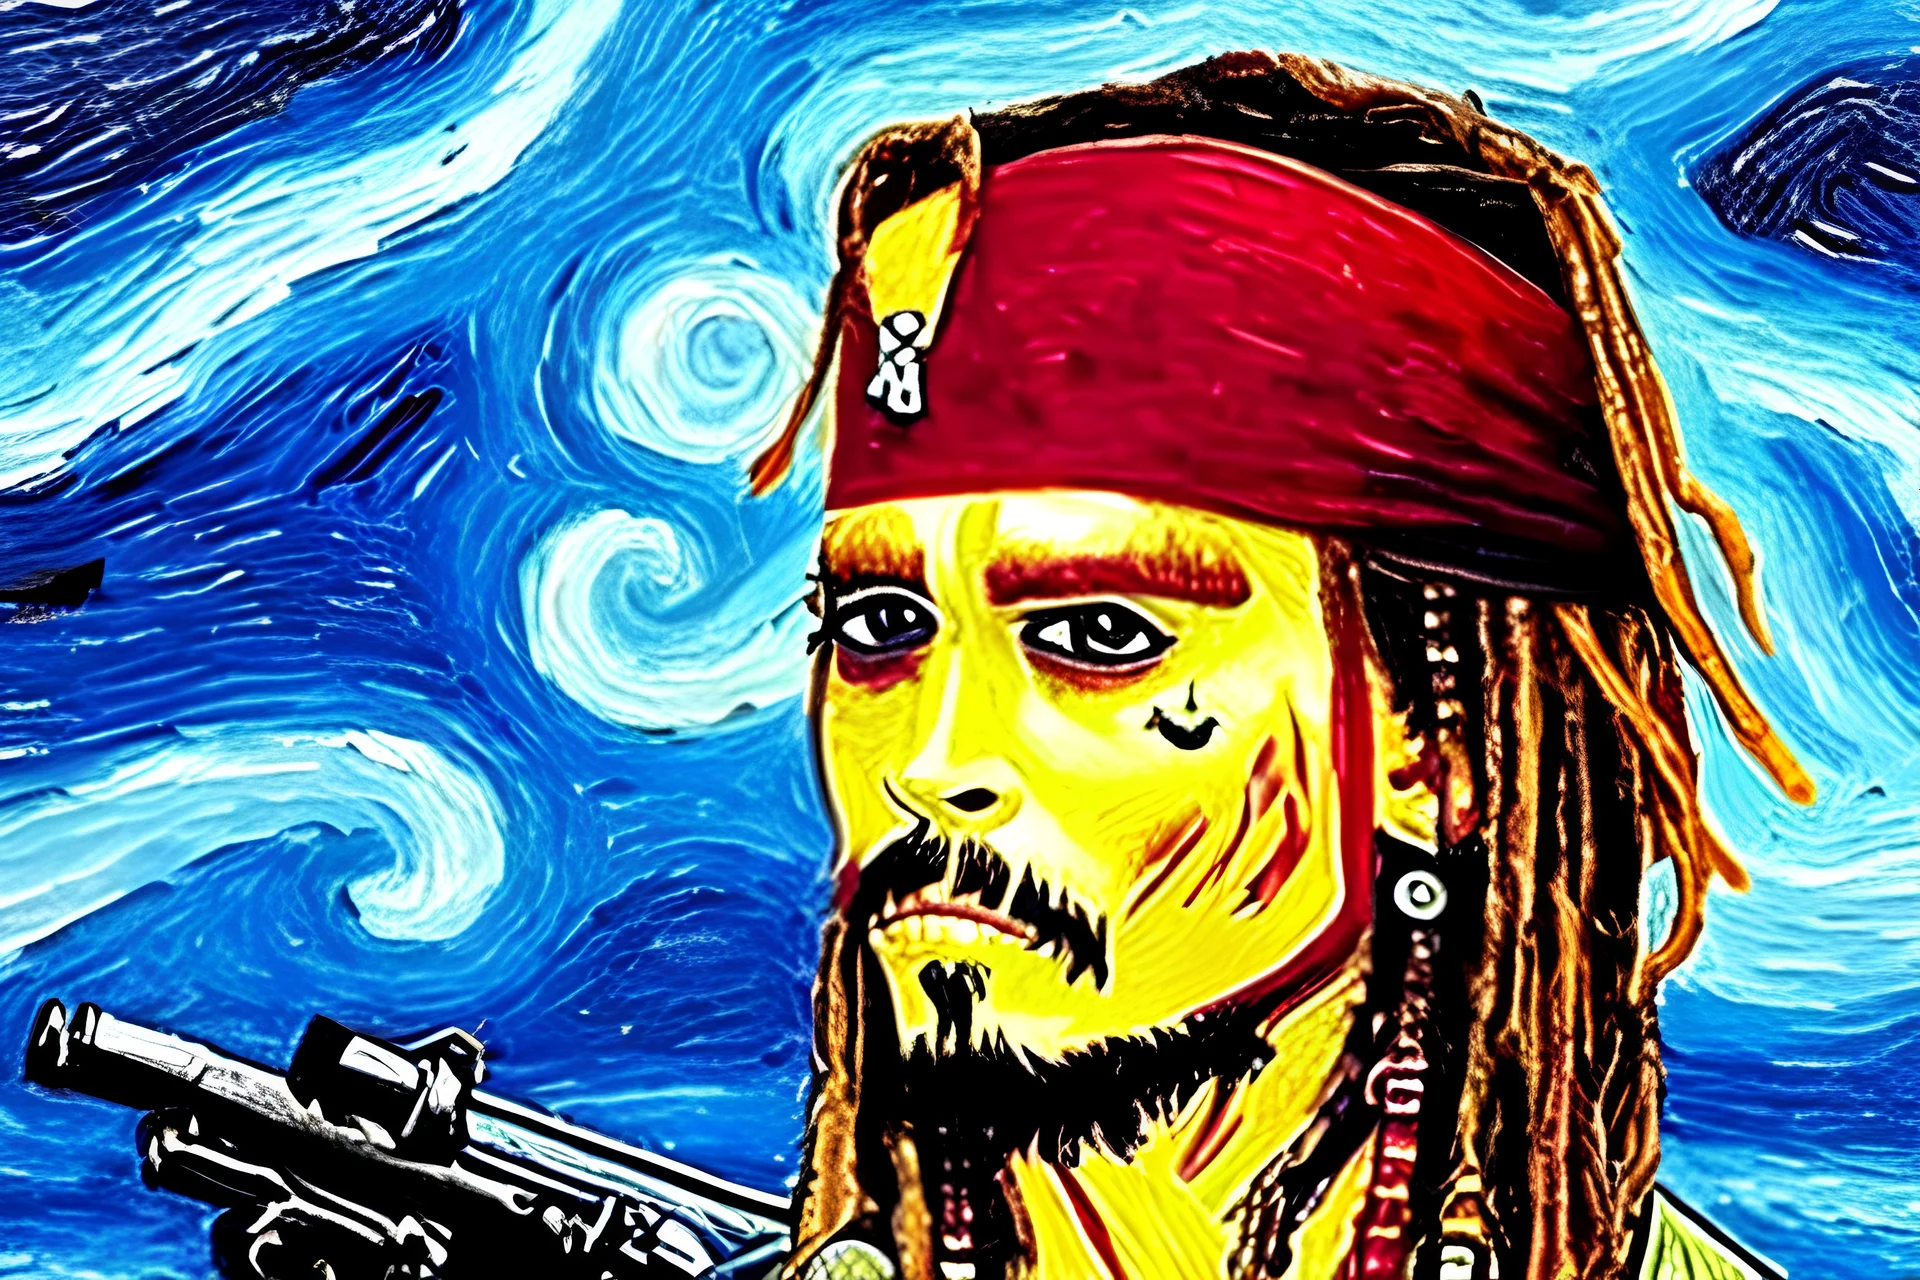 captain Jack Sparrow as Terminator van gogh painting